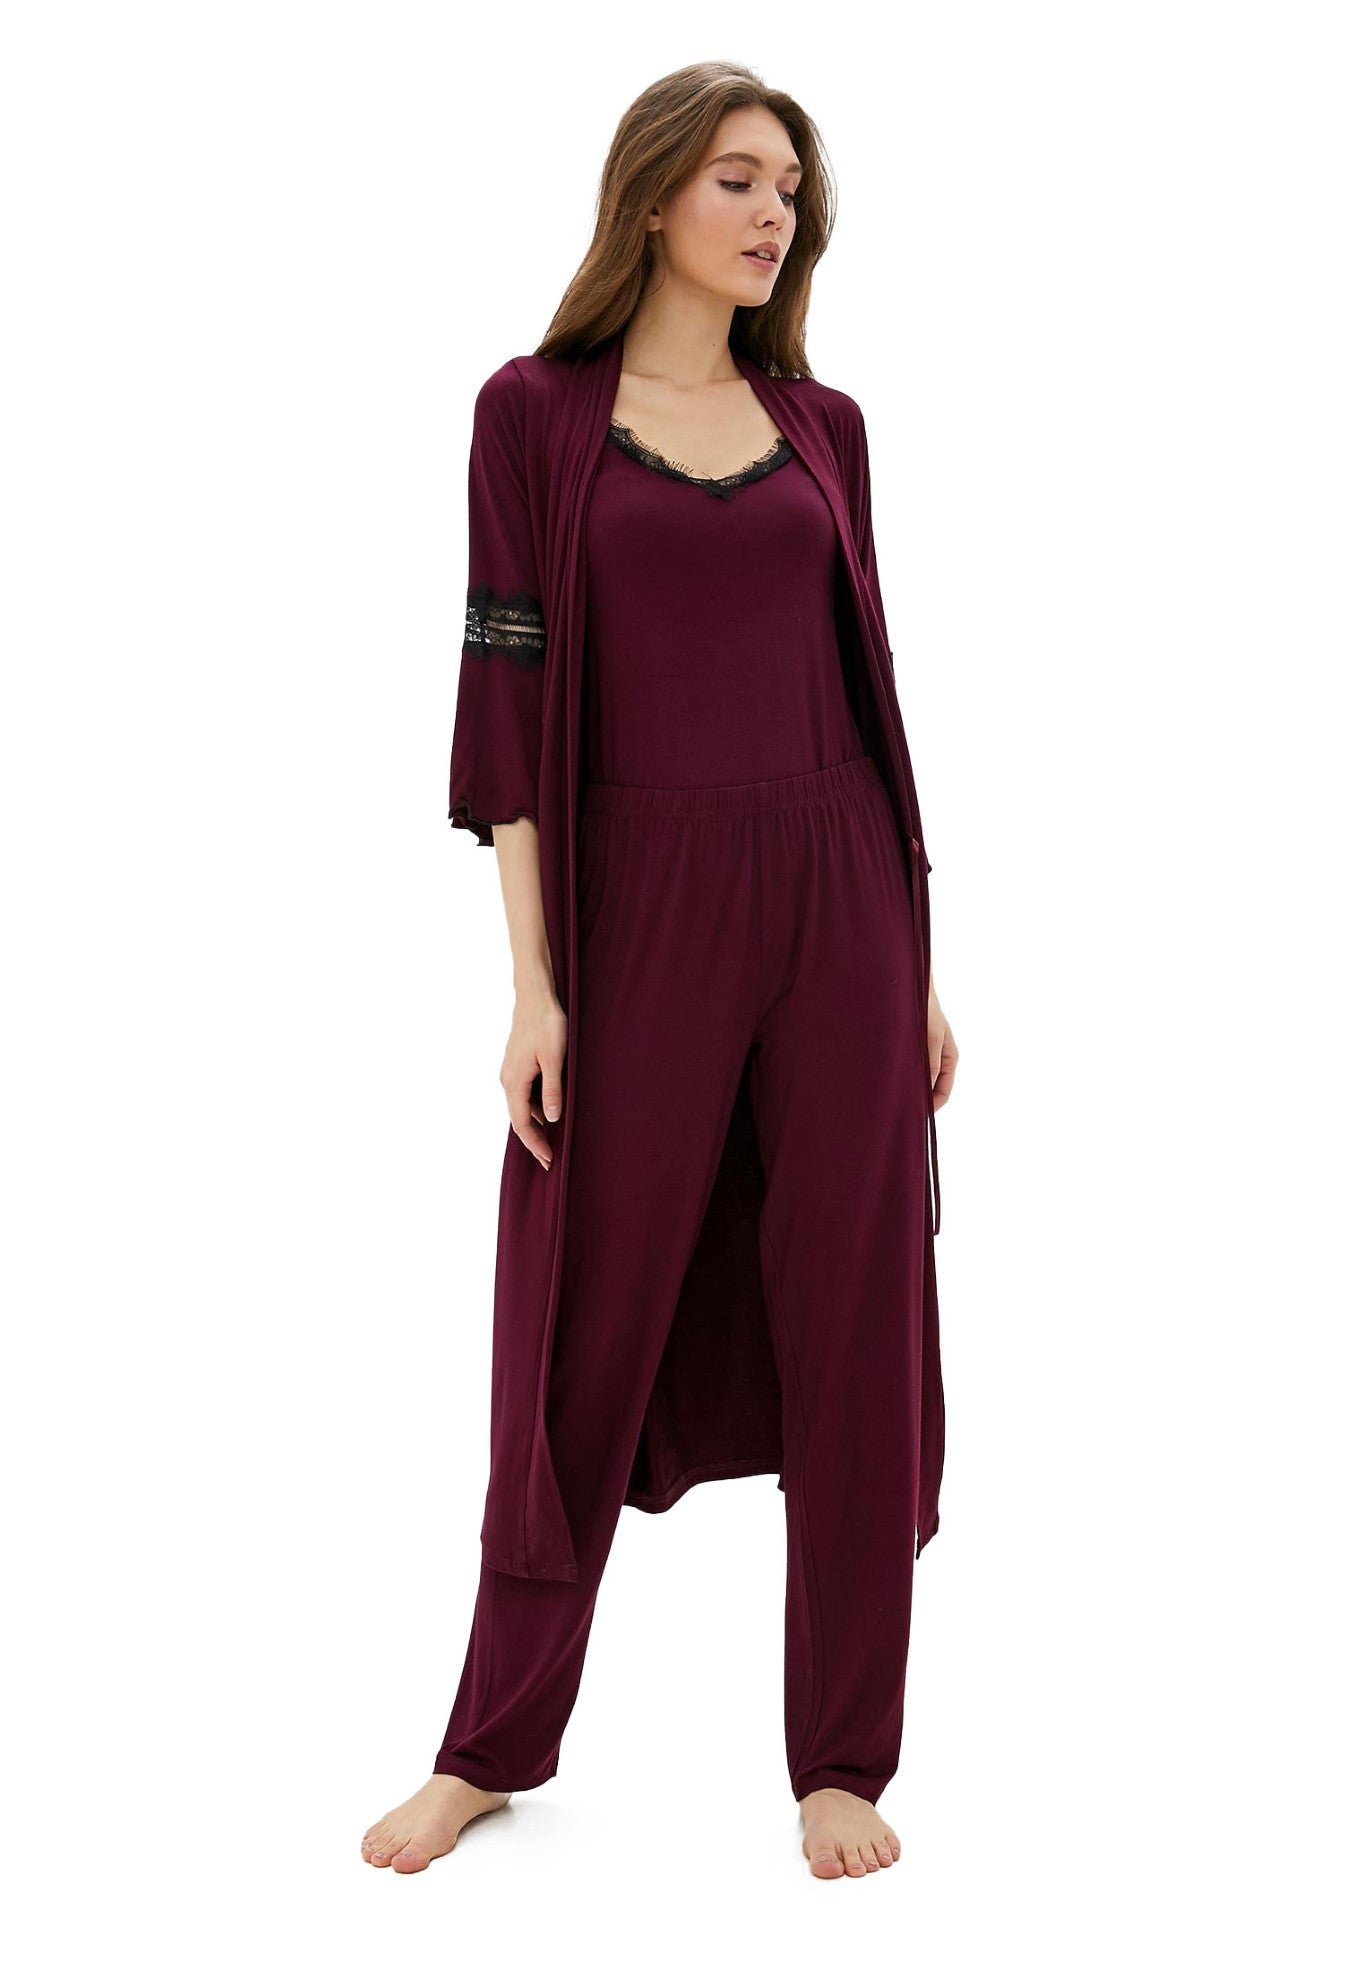 Exclusives Damen Pyjama mit Morgenmantel aus Bambus viskose LMS-6046